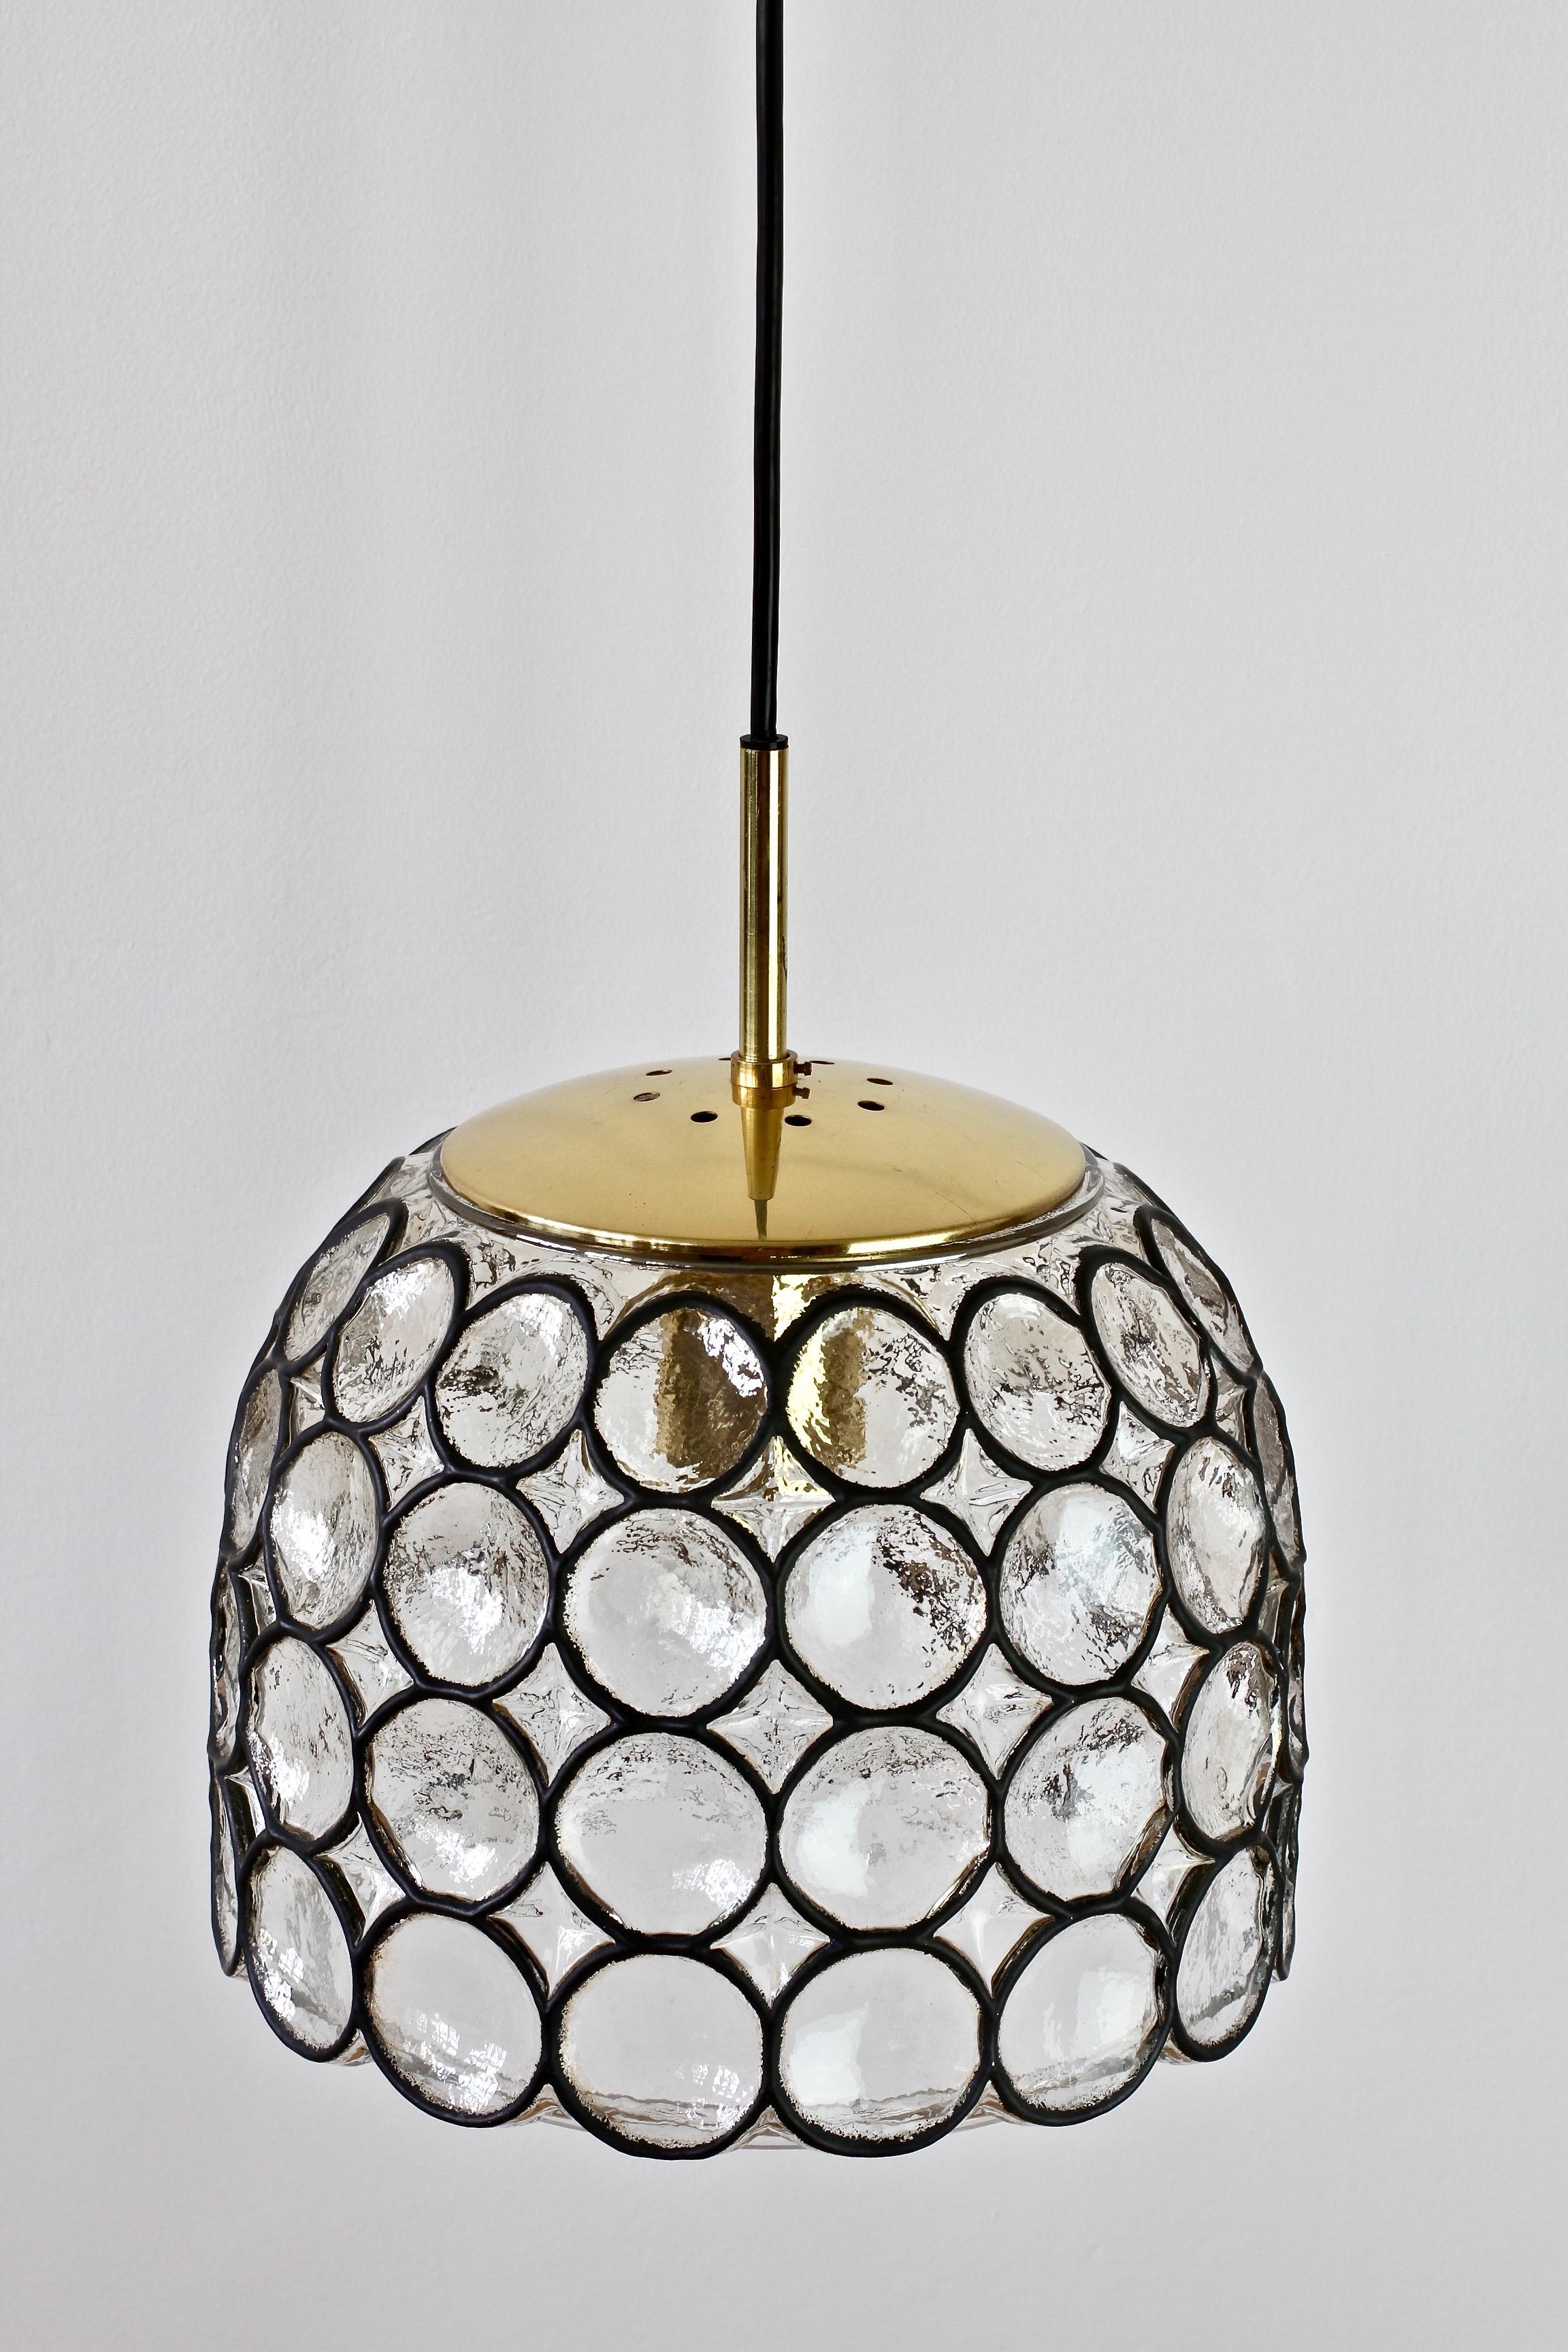 Molded Limburg 1 of 3 Vintage Black Iron Rings Glass & Brass Pendant Lights Lamps